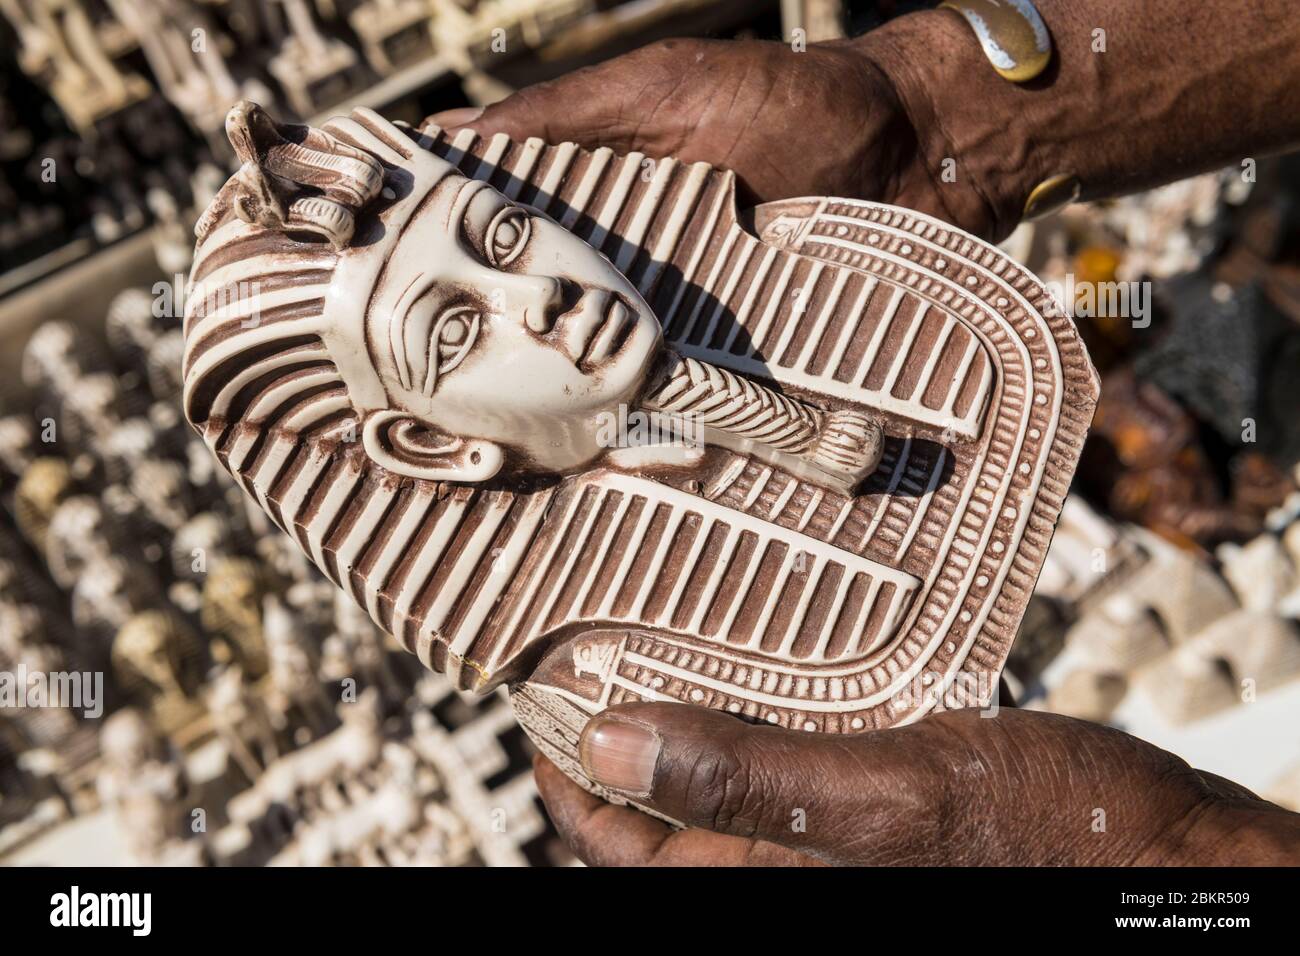 Egypt, Cairo, Giza, tourist market on site of the pyramids of Giza, souvenirs, plaster representing Tutankhamun Stock Photo